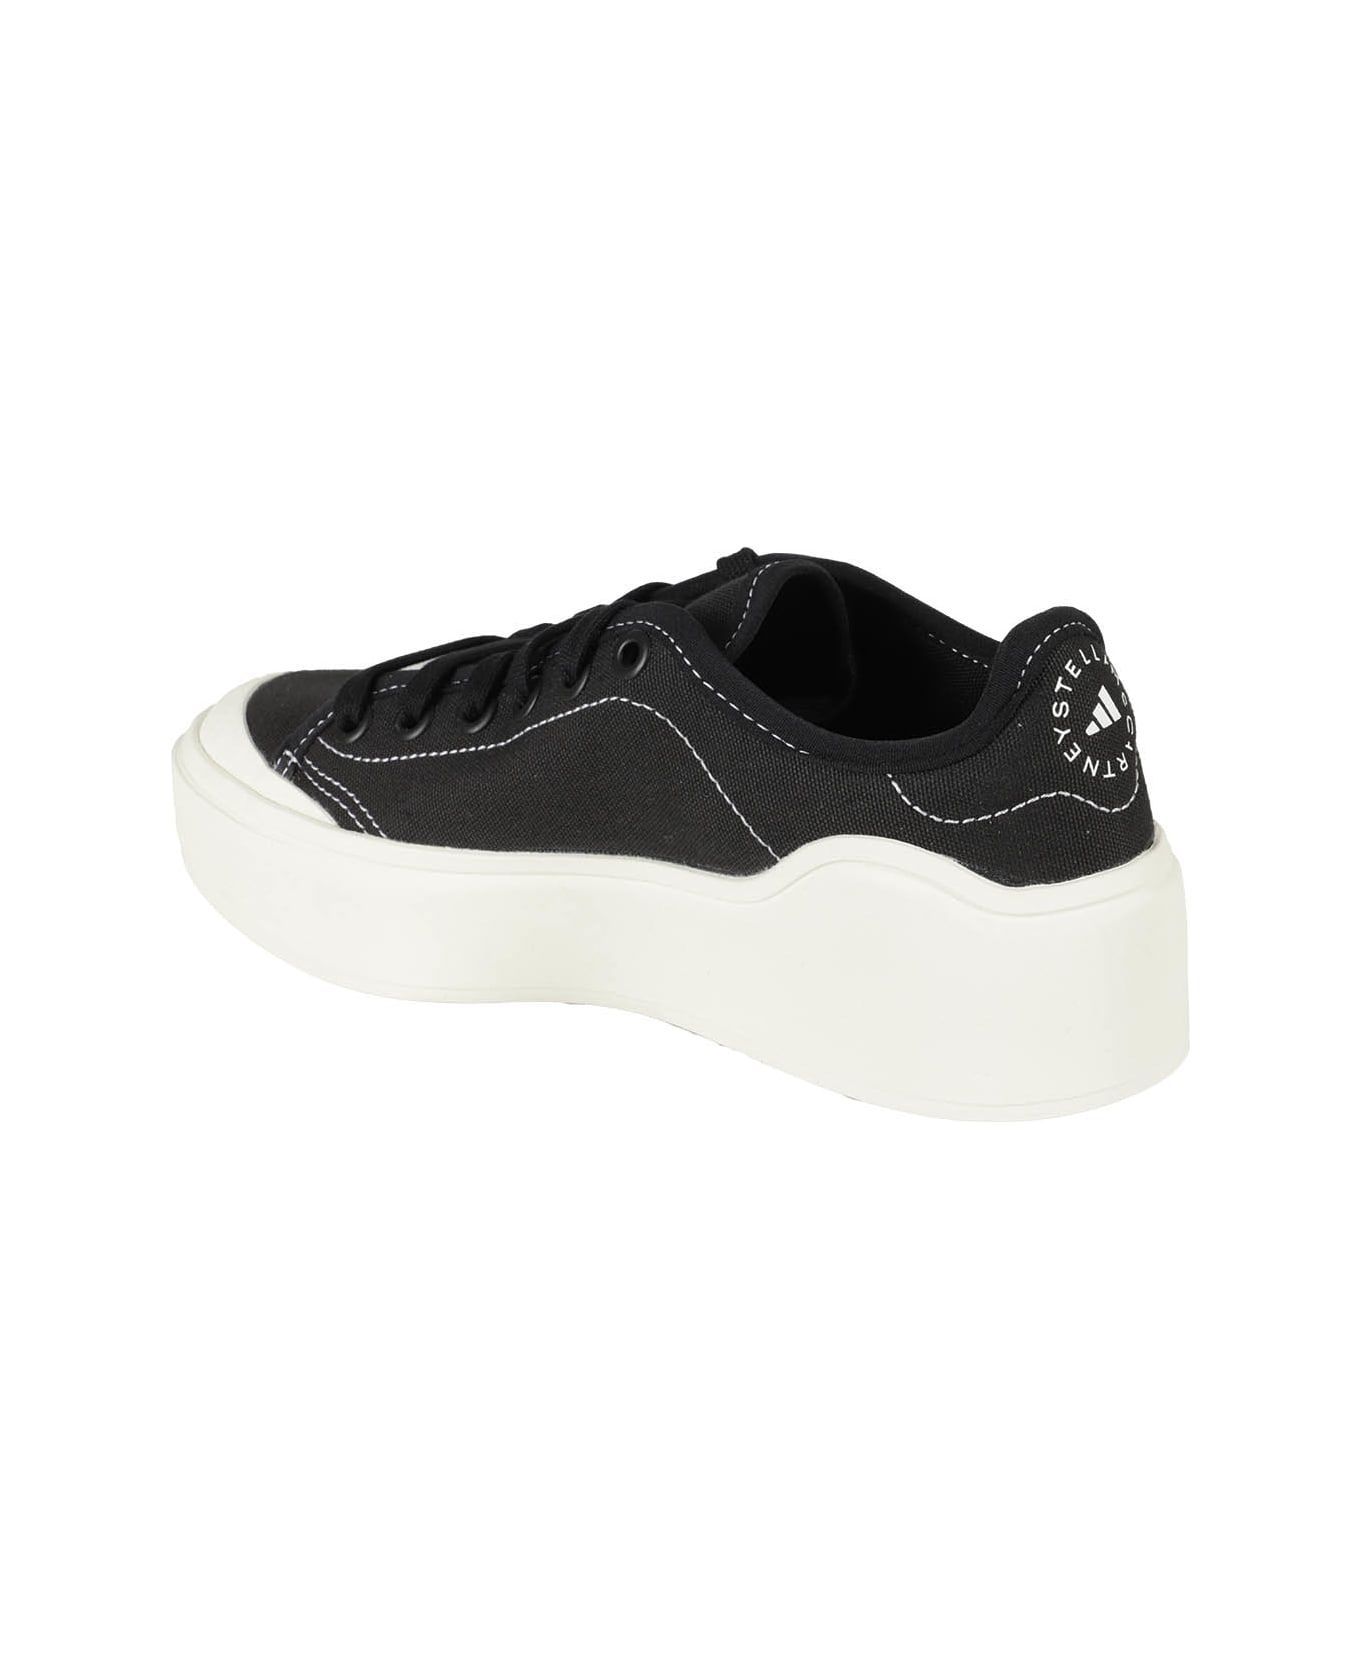 Adidas by Stella McCartney Asmc Court Cotton - Black White